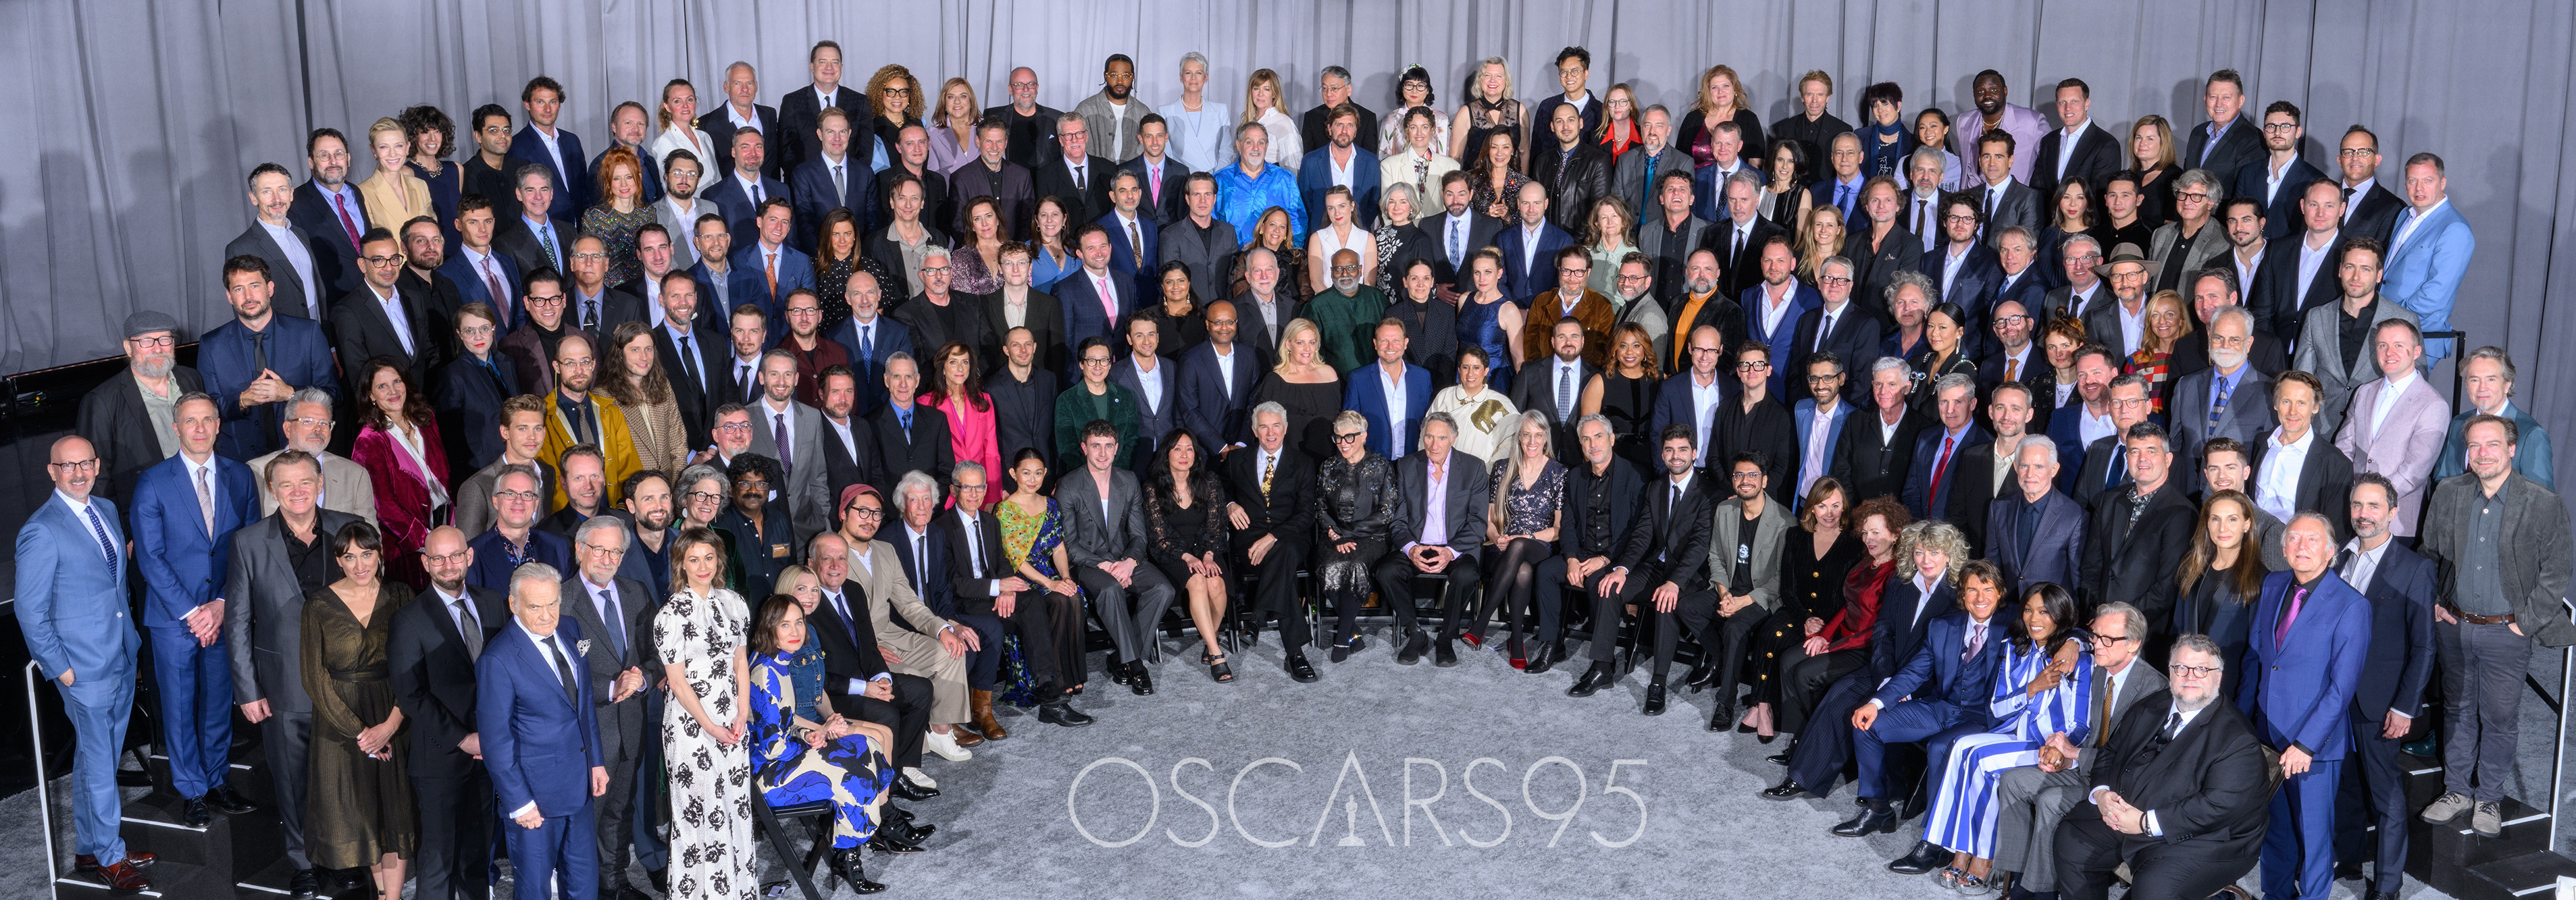 001-Oscars-Nominees-Luncheon-Group-Photo-002.jpg